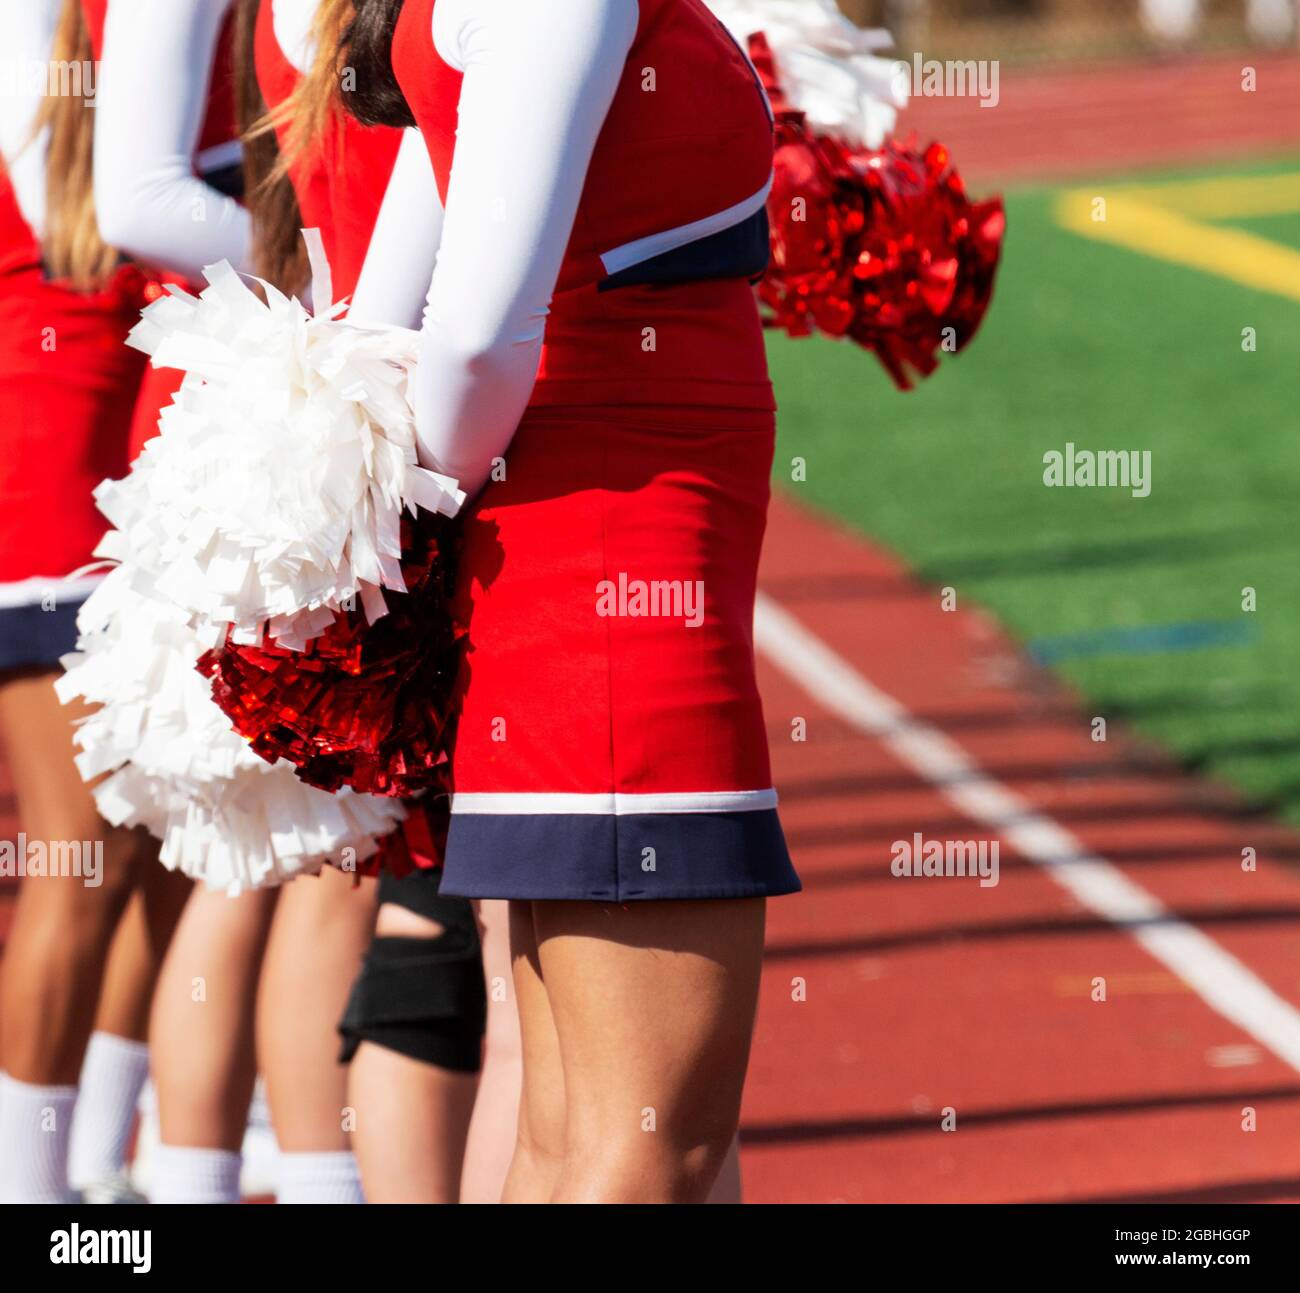 Portrait of cheerleader ( 8-9 years) holding pom-pom Stock Photo - Alamy